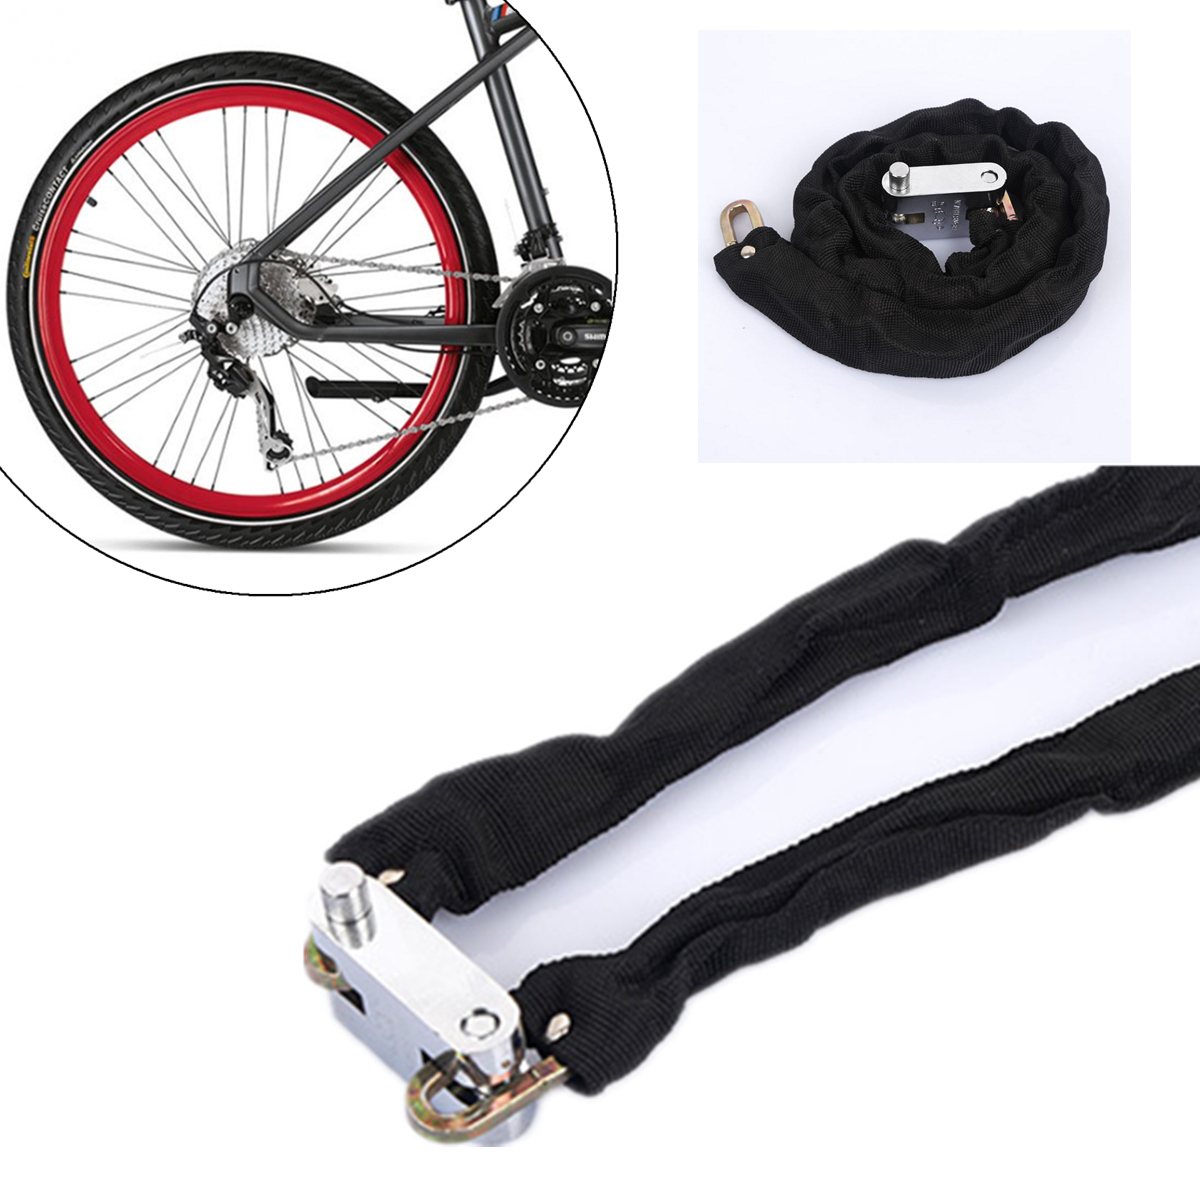 

BIKIGHT 1.2m Metal Cycling Bicycle Motorcycle Heavy Duty Chain Lock Padlock Secure Bike Lock